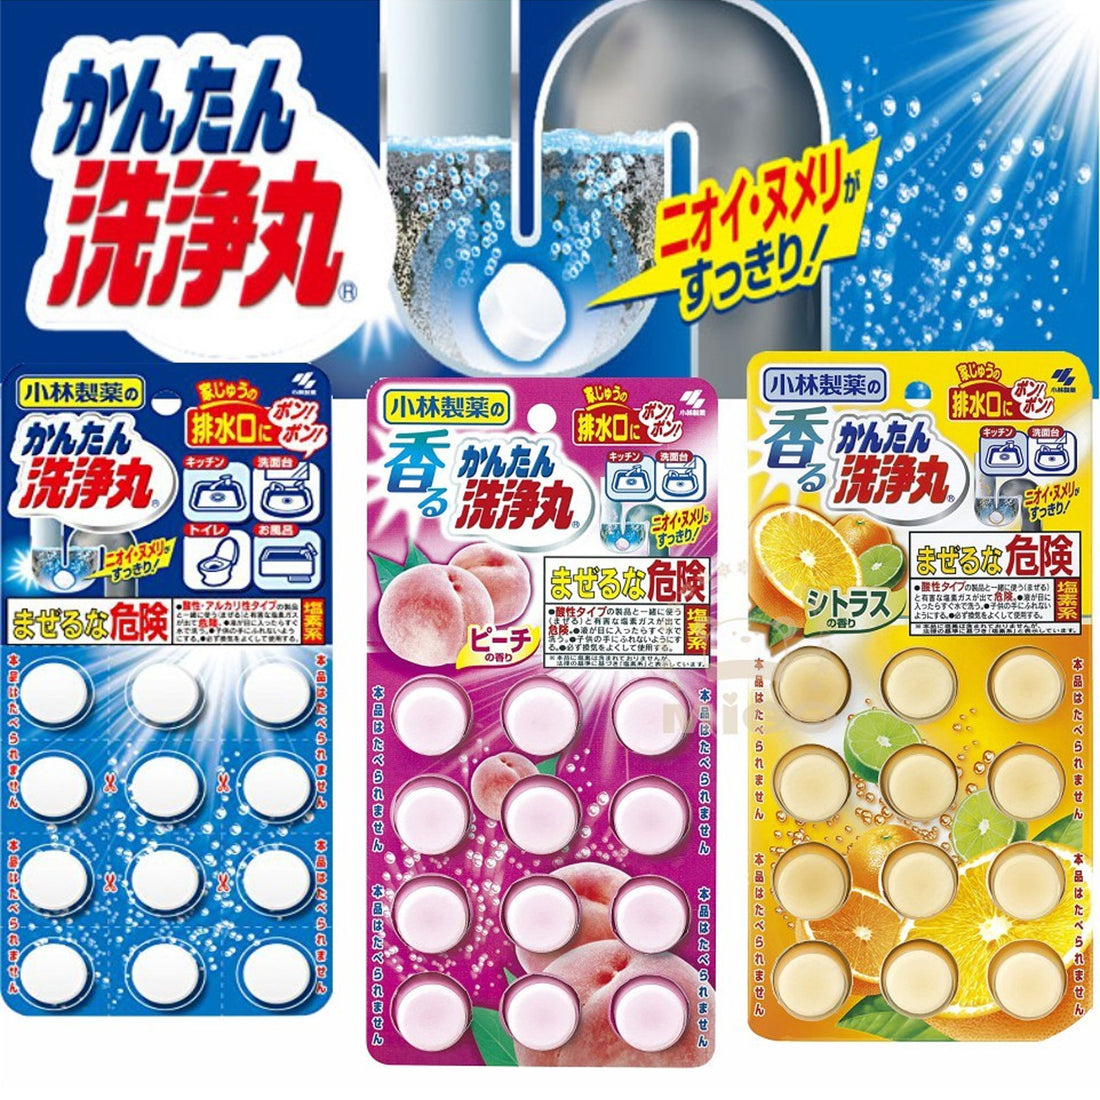 KOBAYASHI Easy drain cleaning tablets